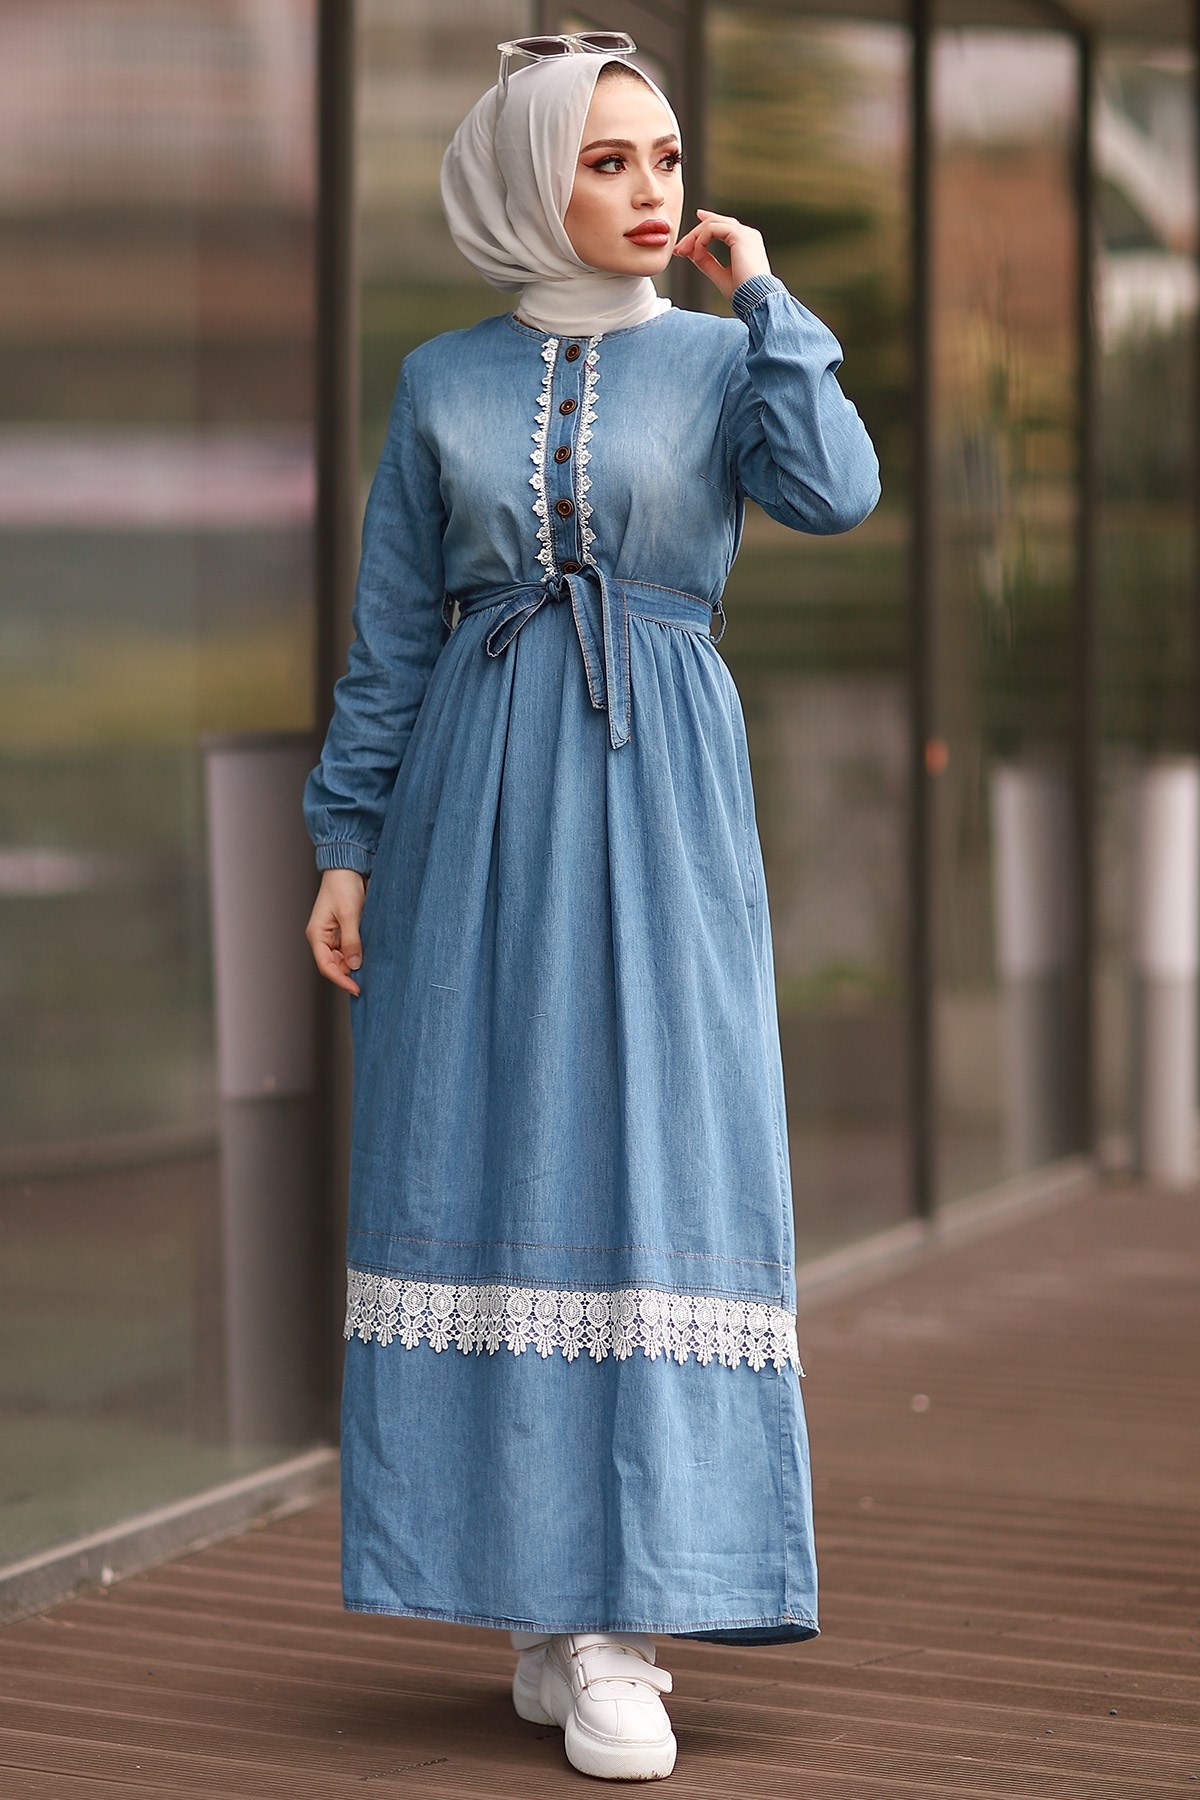 Lace Detailed Denim Dress - Light Blue